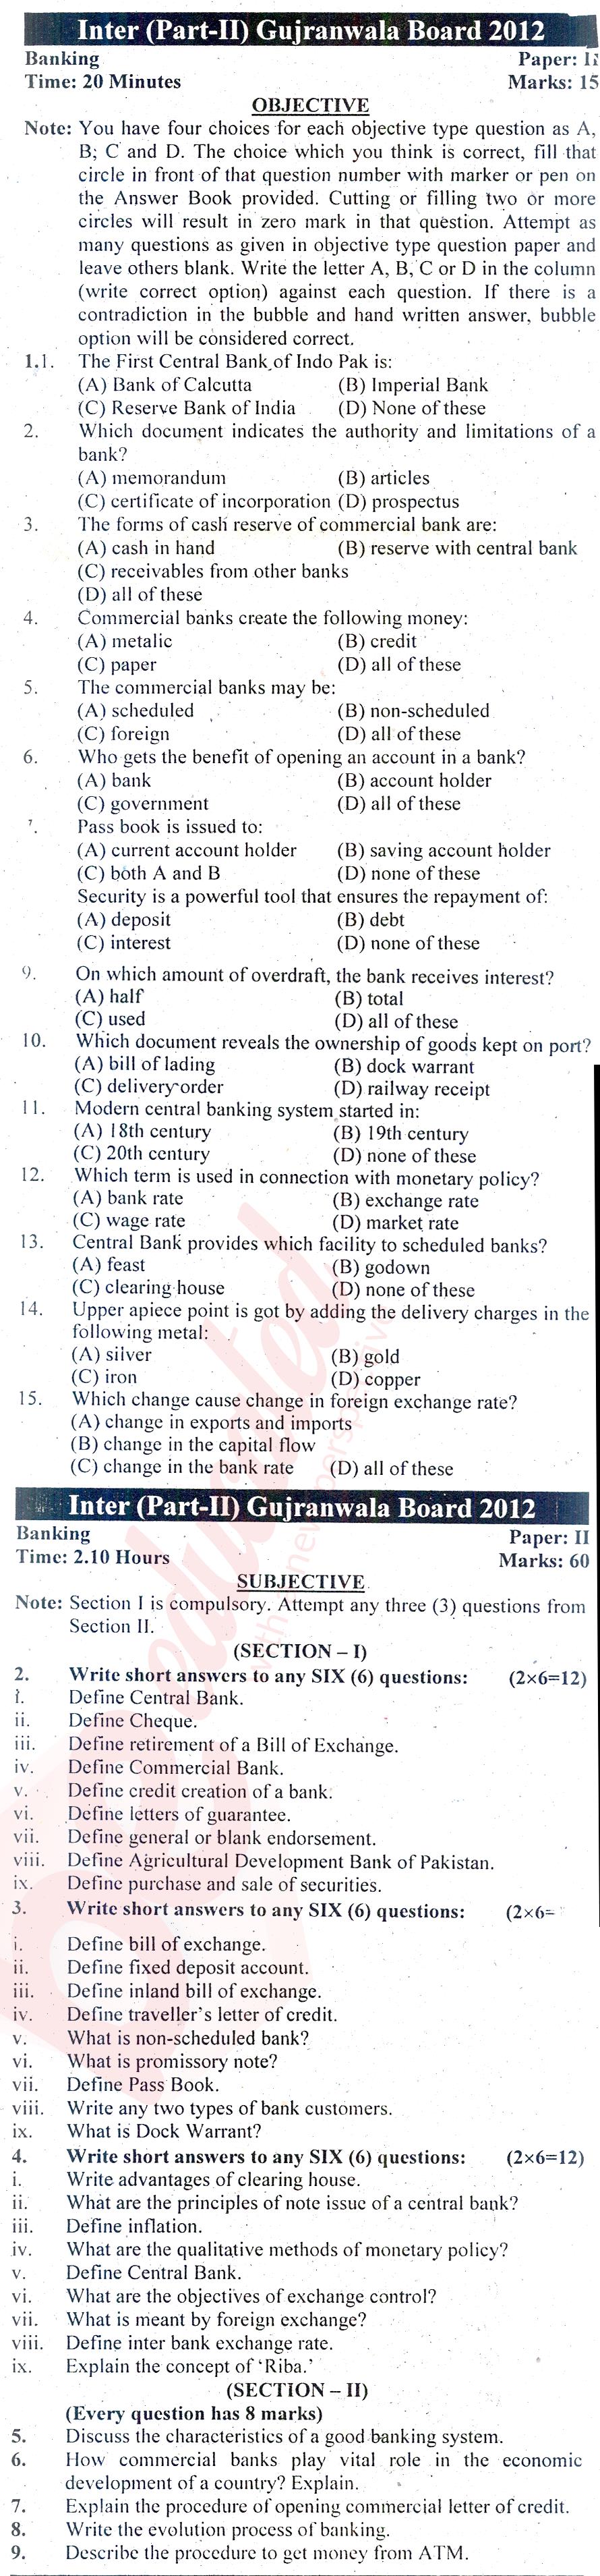 Principles of Banking ICOM Part 2 Past Paper Group 1 BISE Gujranwala 2012